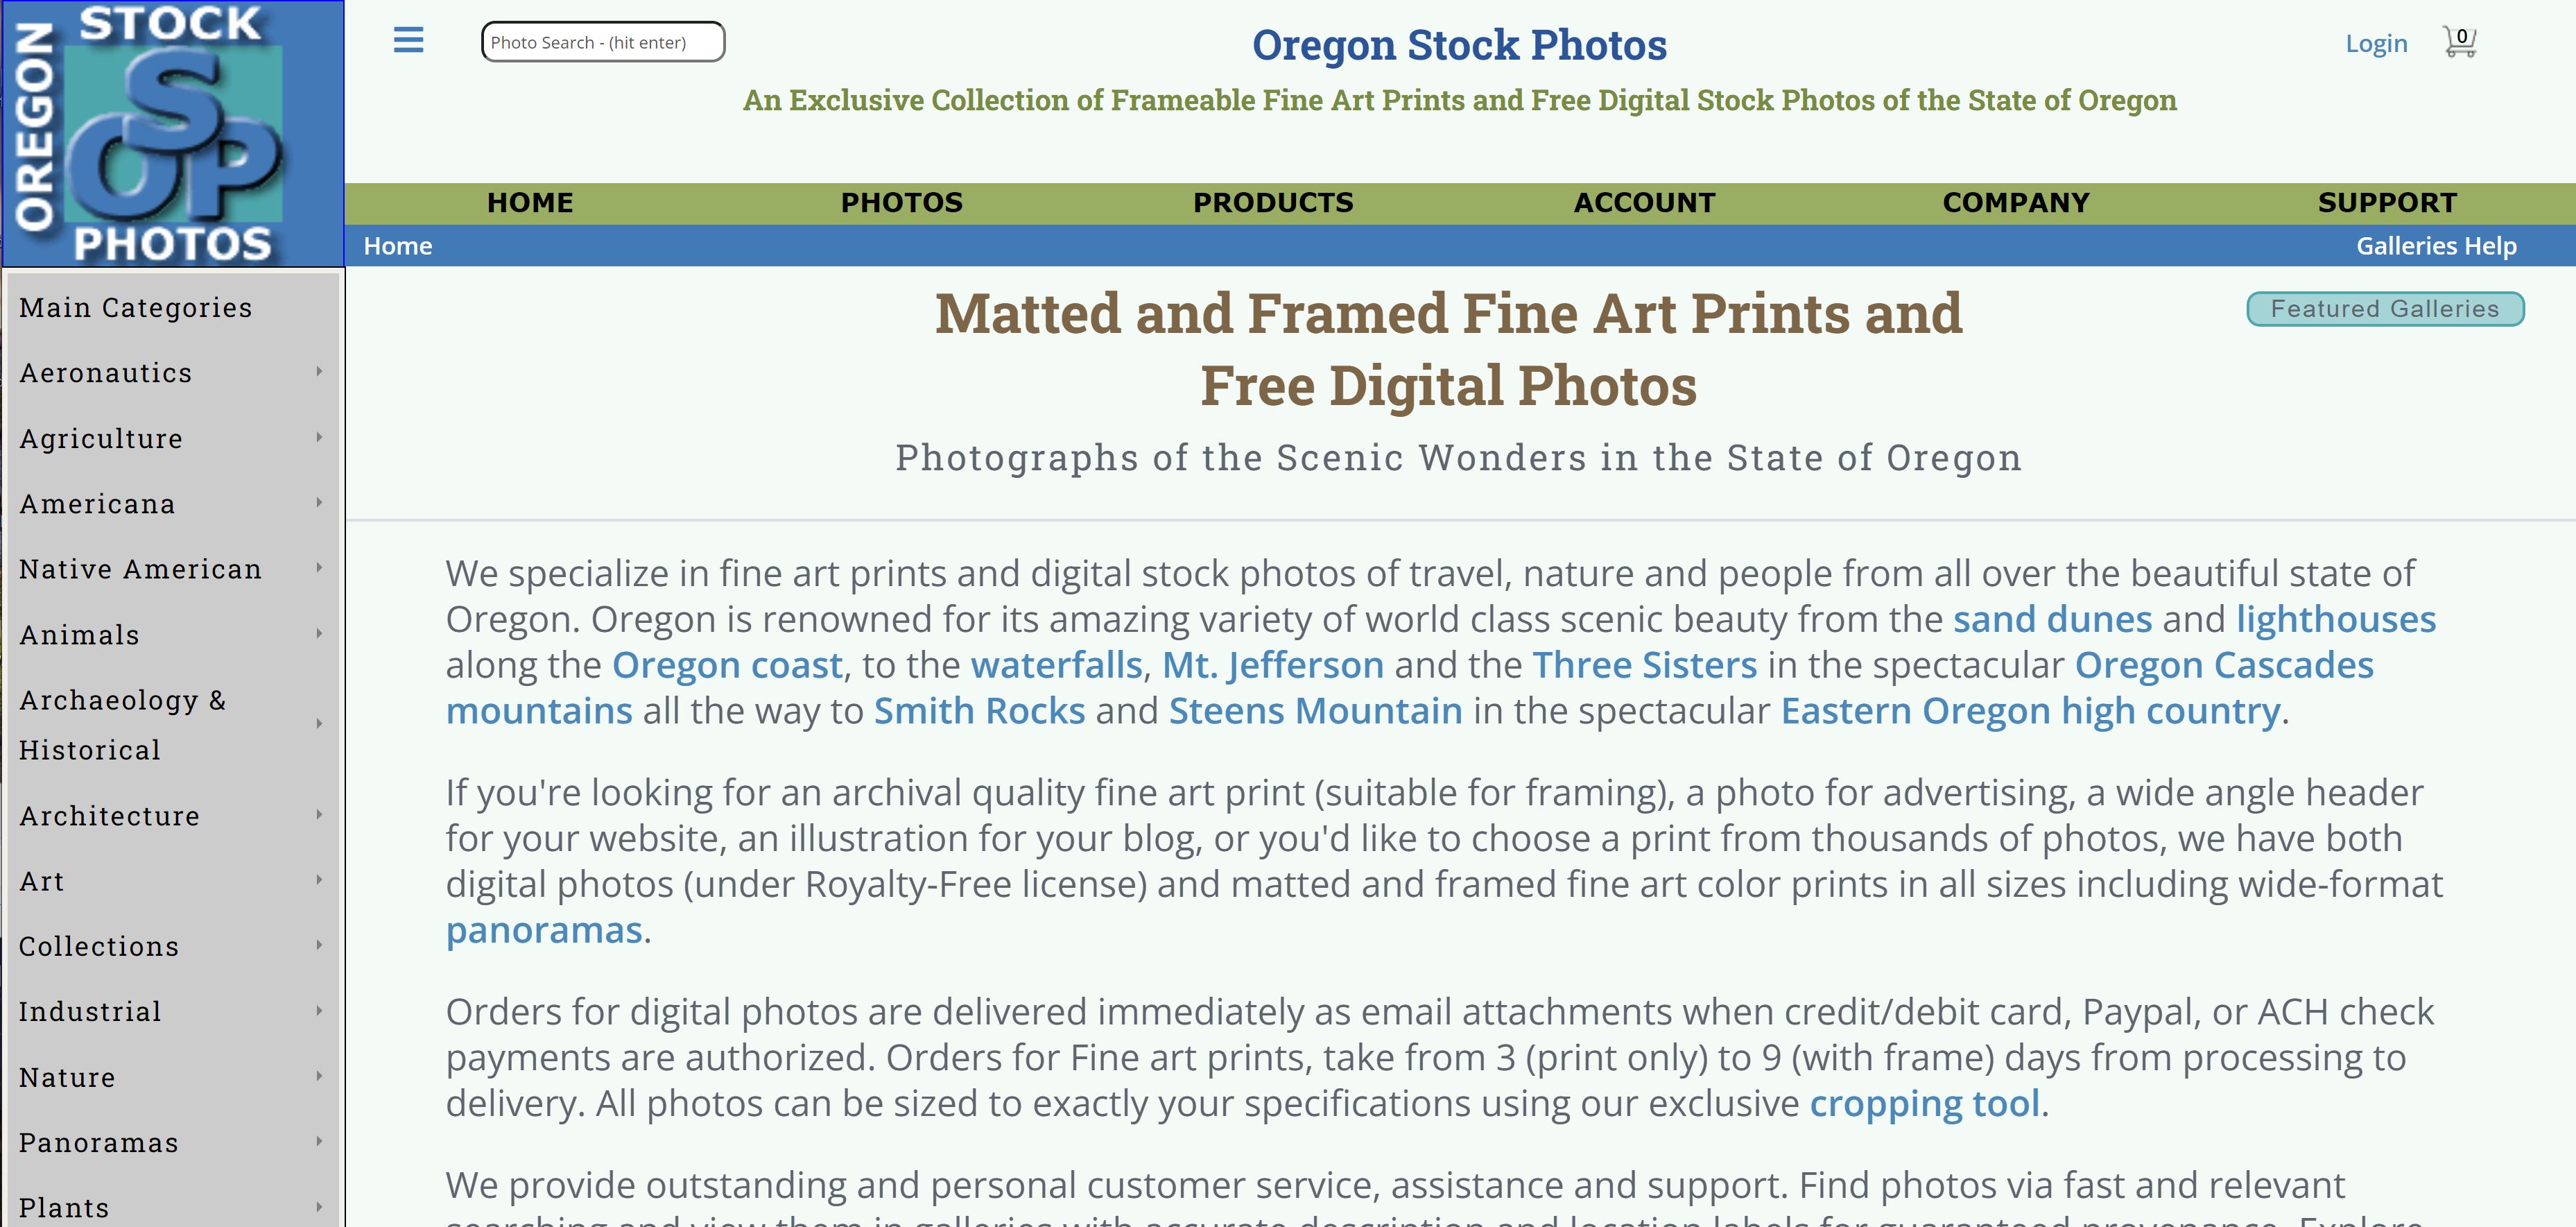 Oregon Stock Photos Homepage image